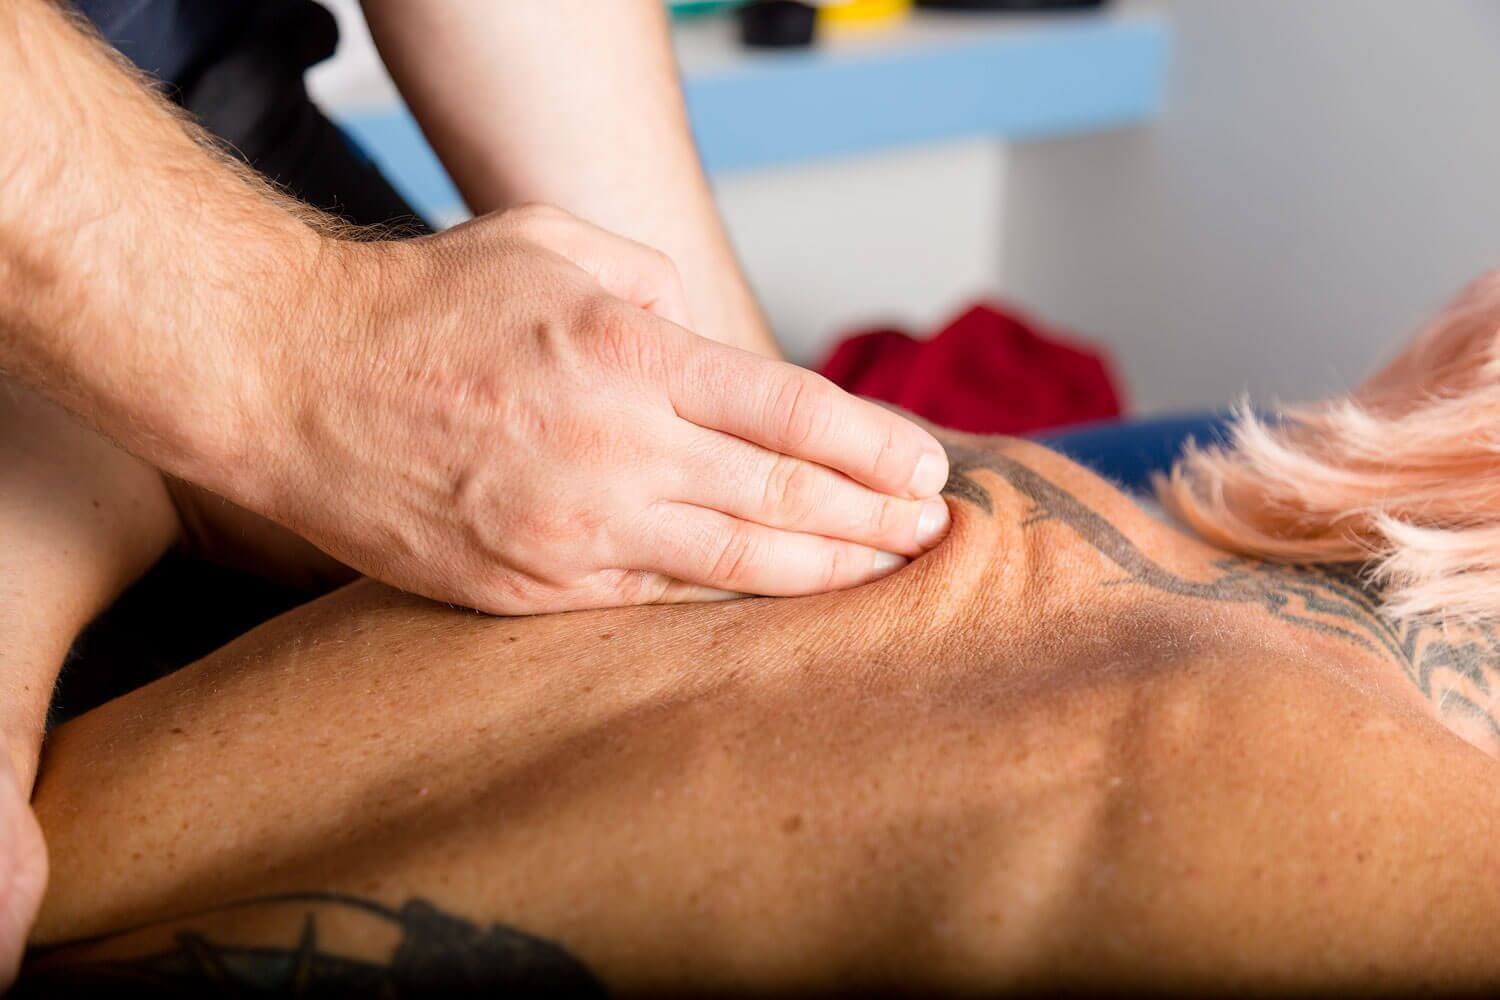 euphoria sports therapy soft tissue massage pic 4